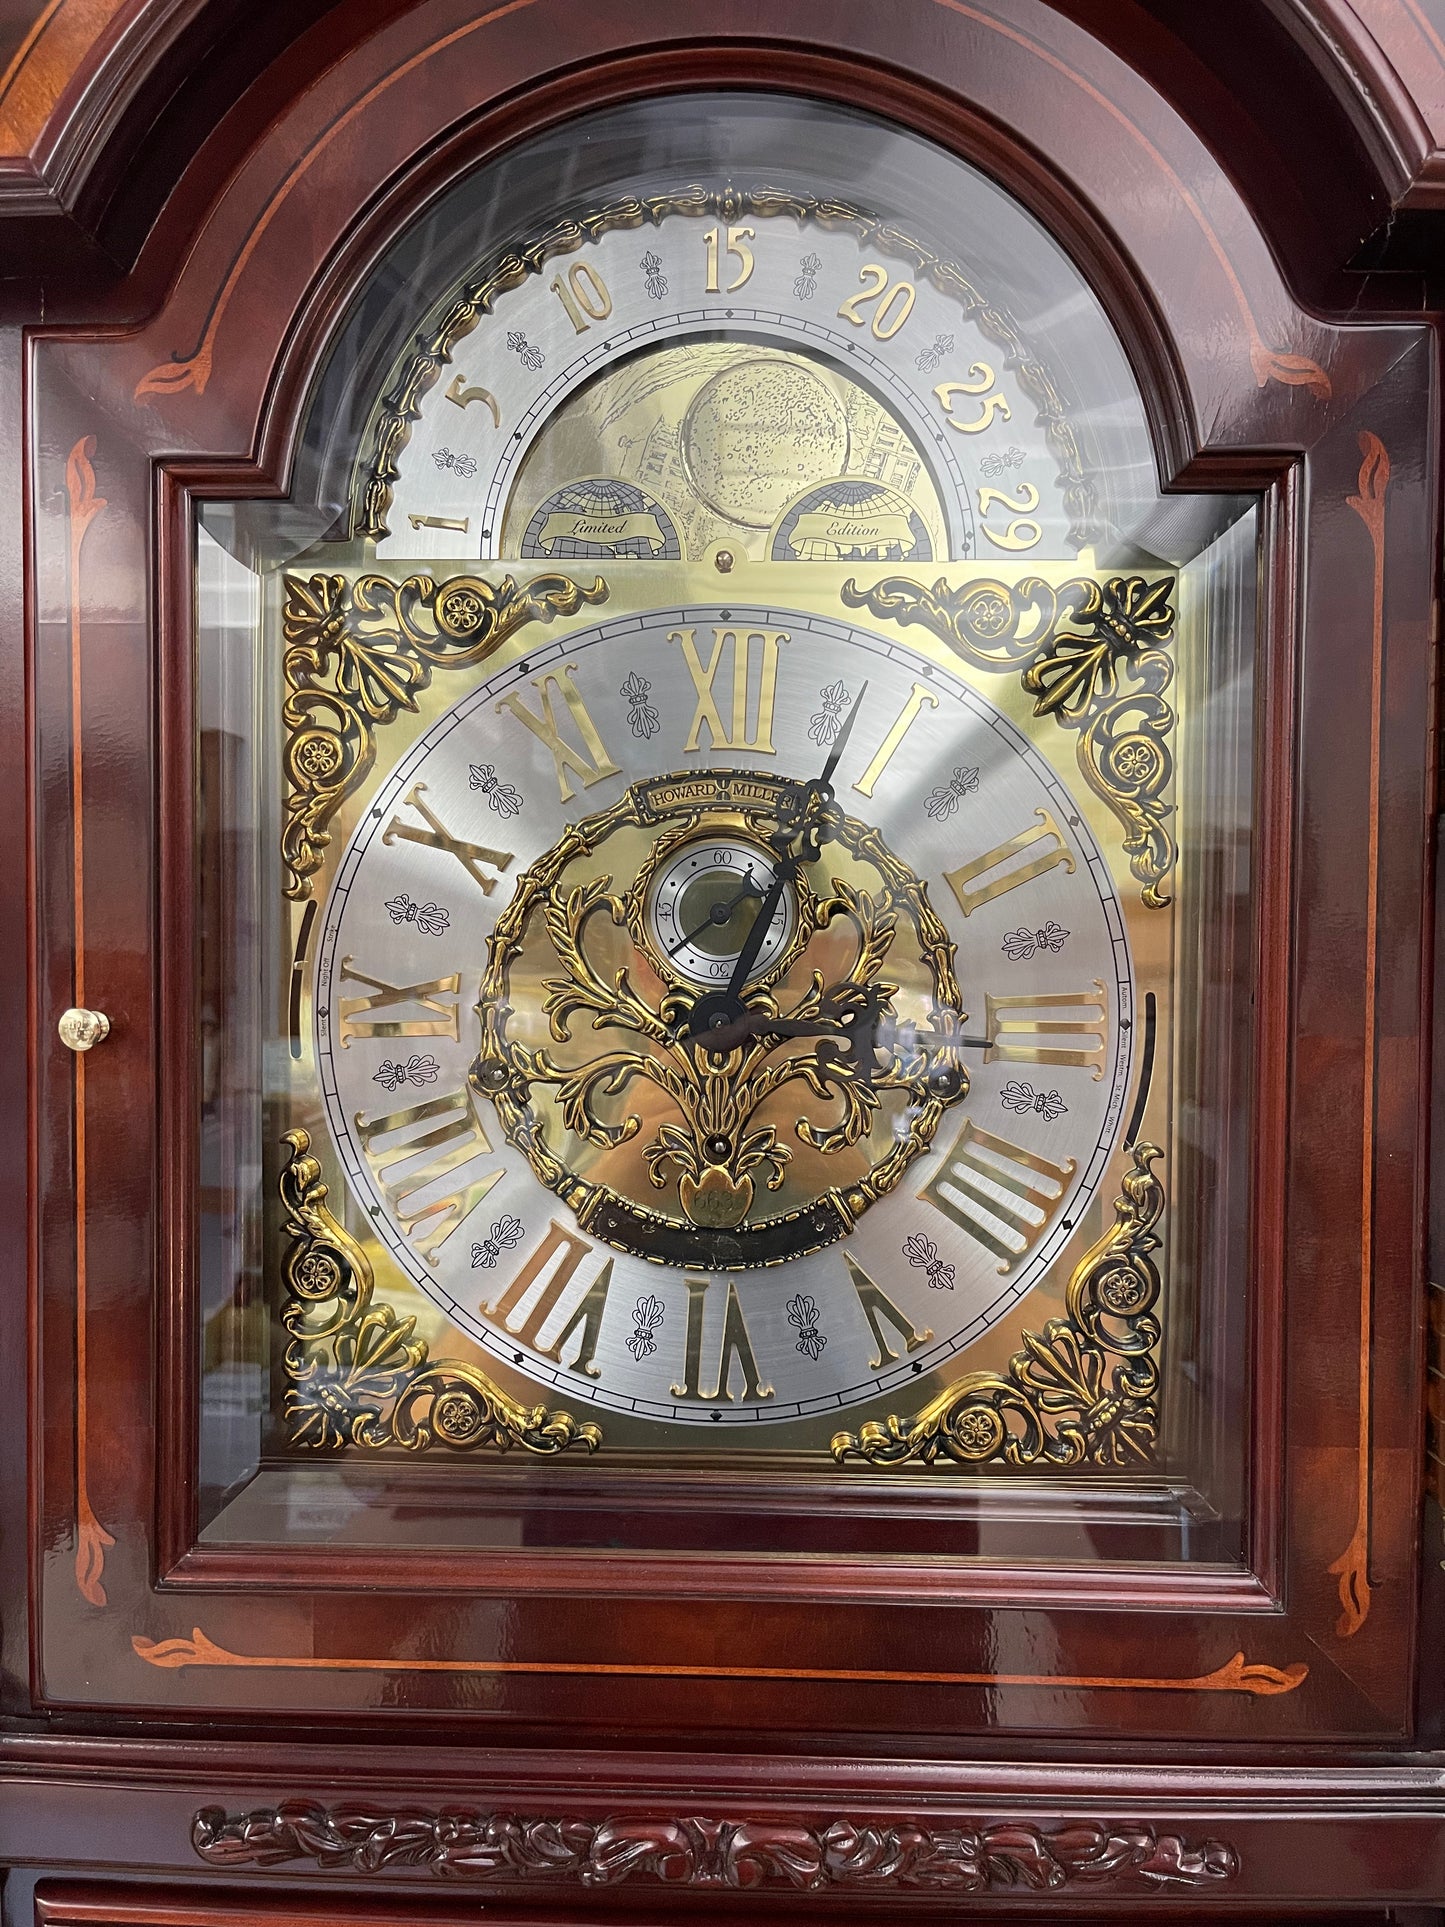 Howard Miller J.H. Miller 611-030 Grandfather Clock